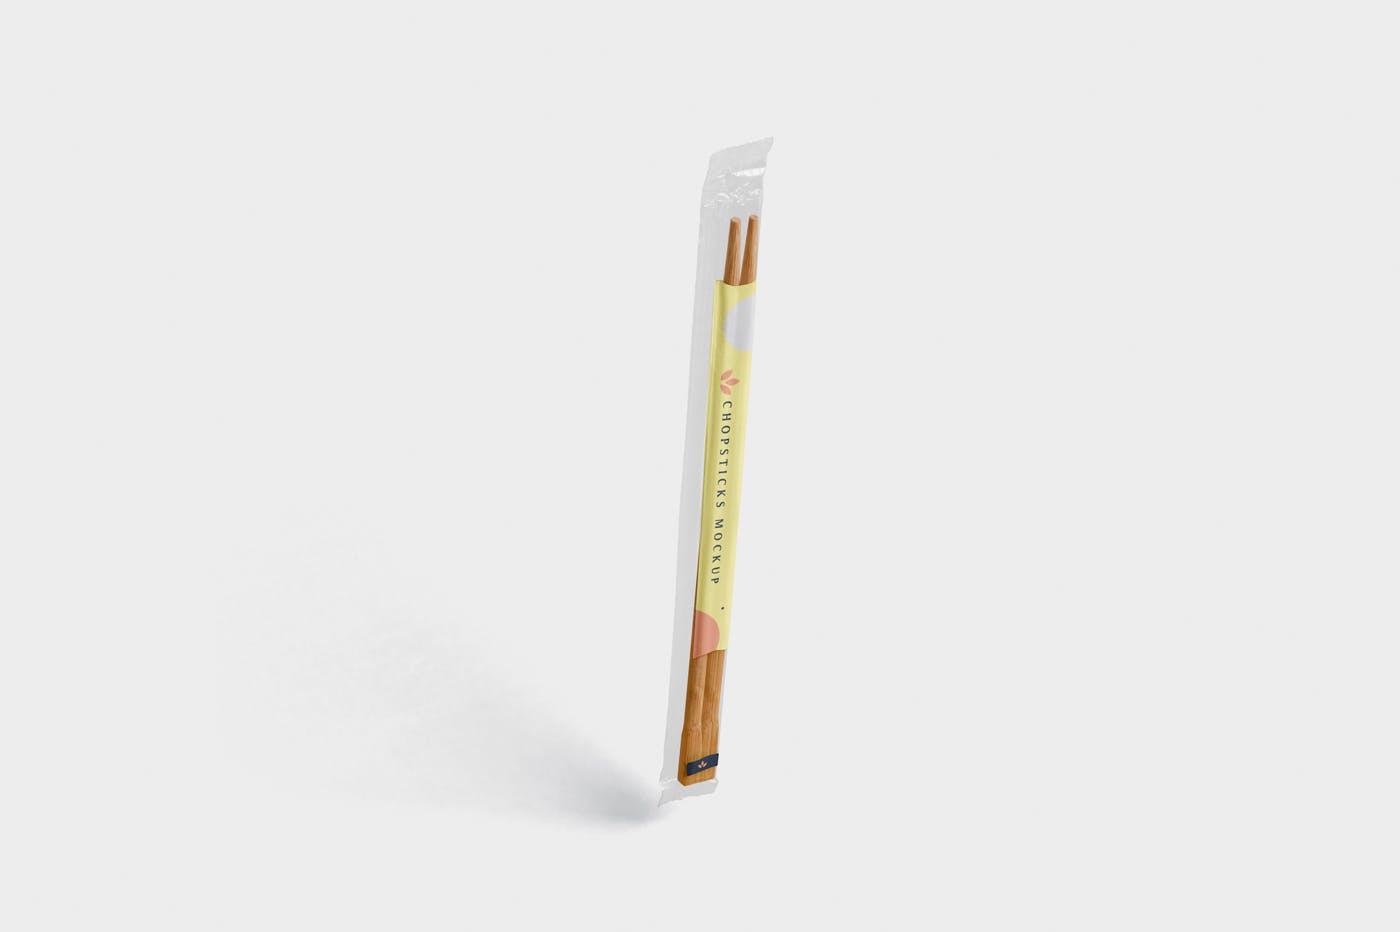 筷子透明包装设计效果图样机 Chopsticks Mockup in Transparent Packaging插图(4)